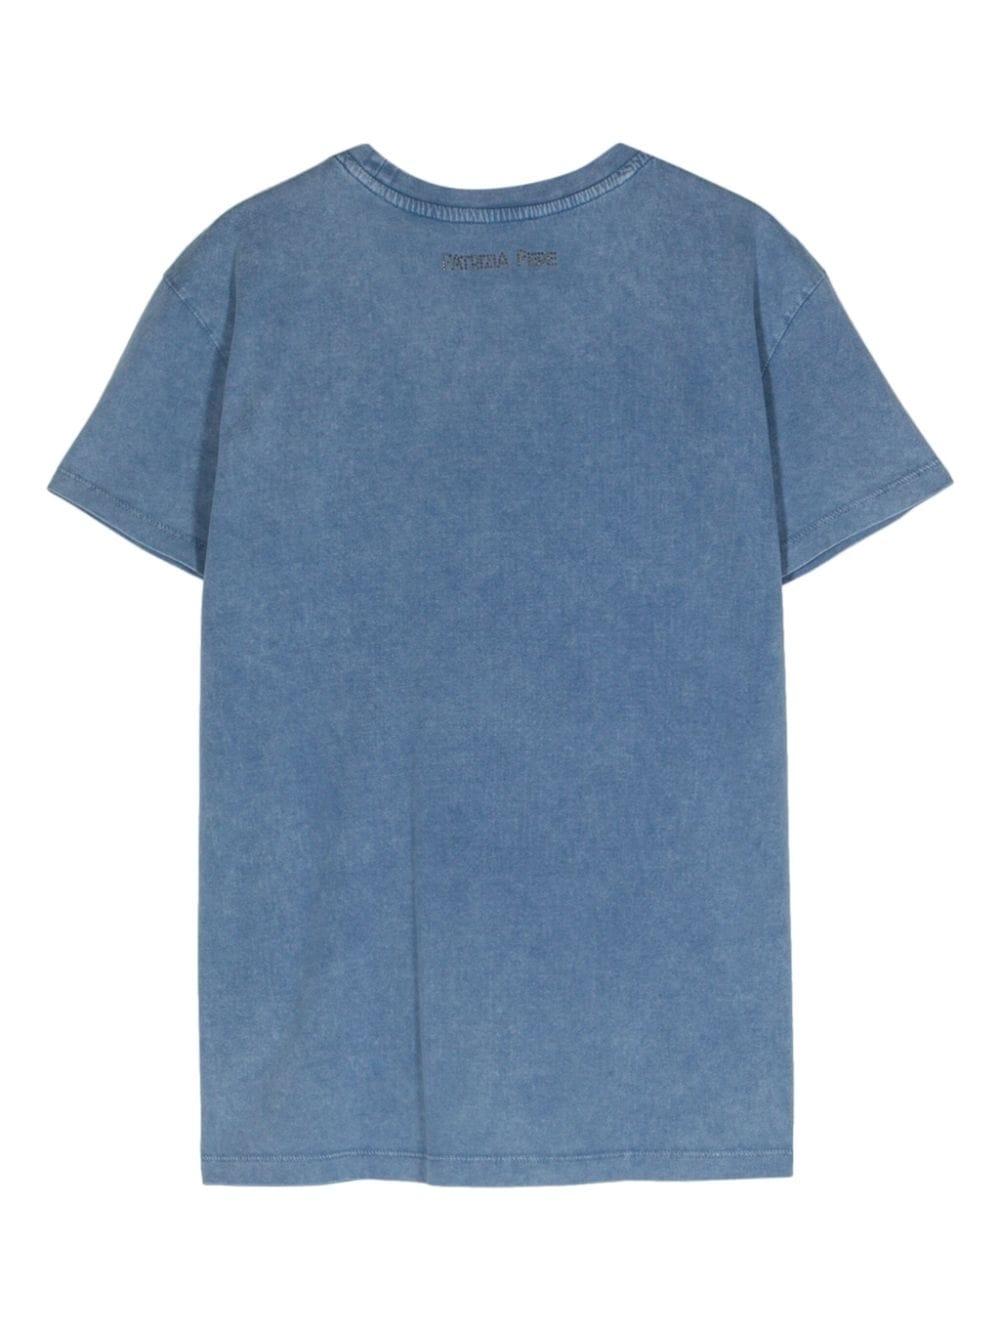 Camiseta Patrizia Pepe Lavada con Strass Blue Wash